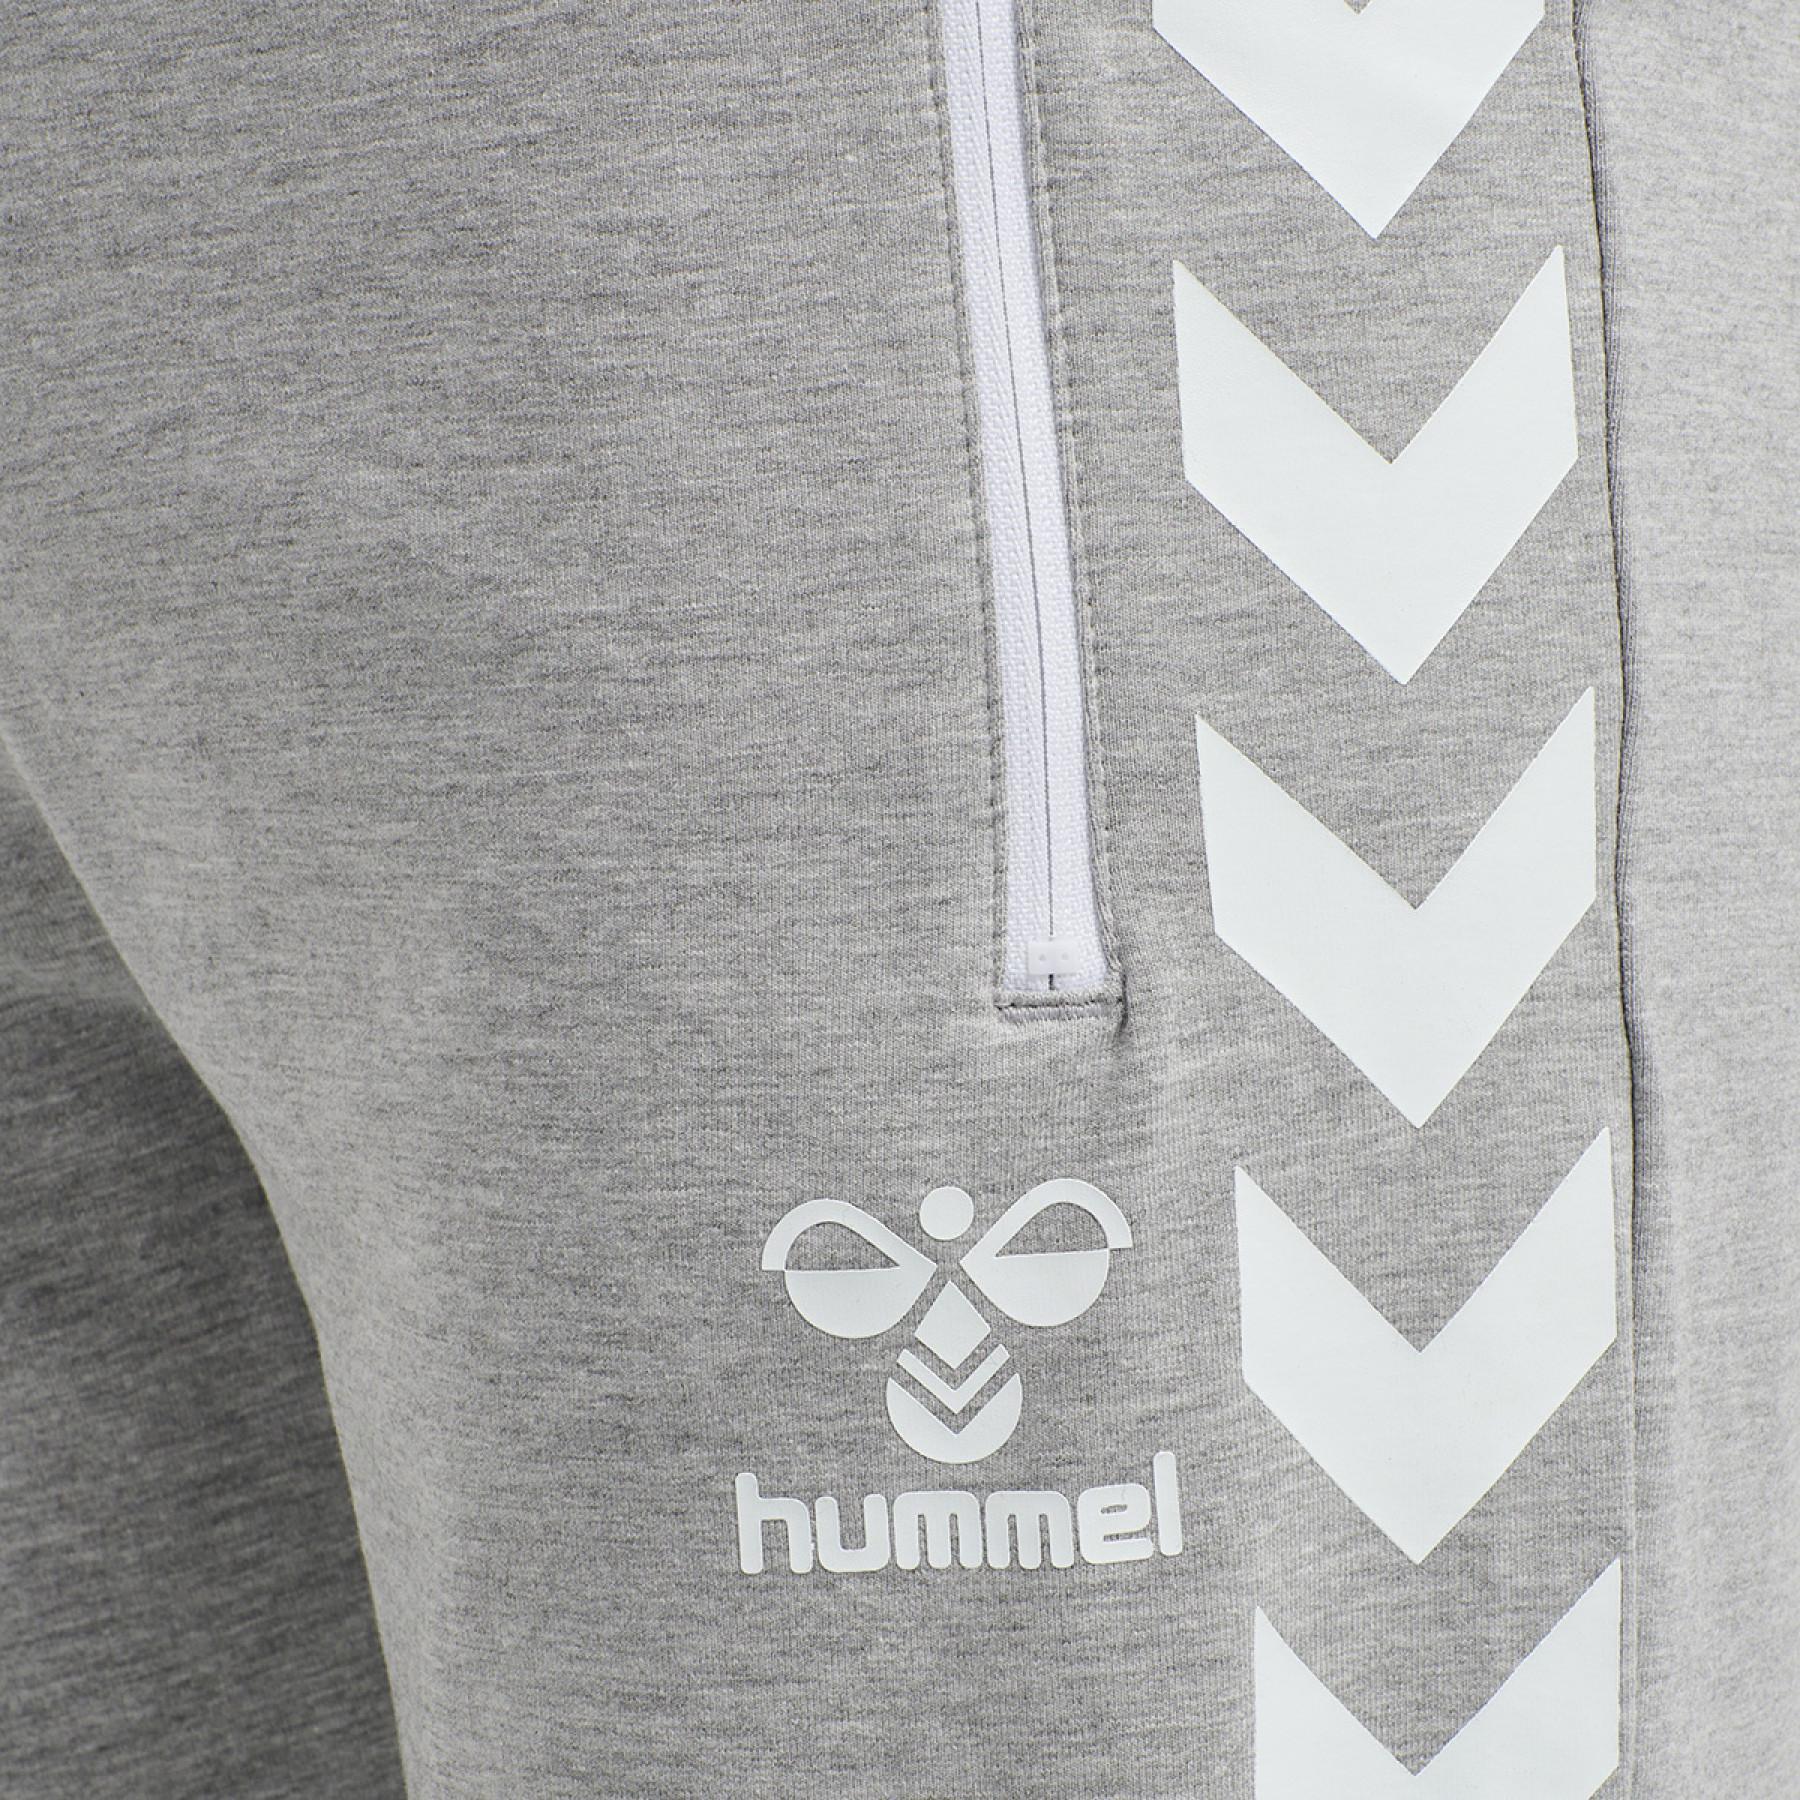 Shorts Hummel hmlray 2.0